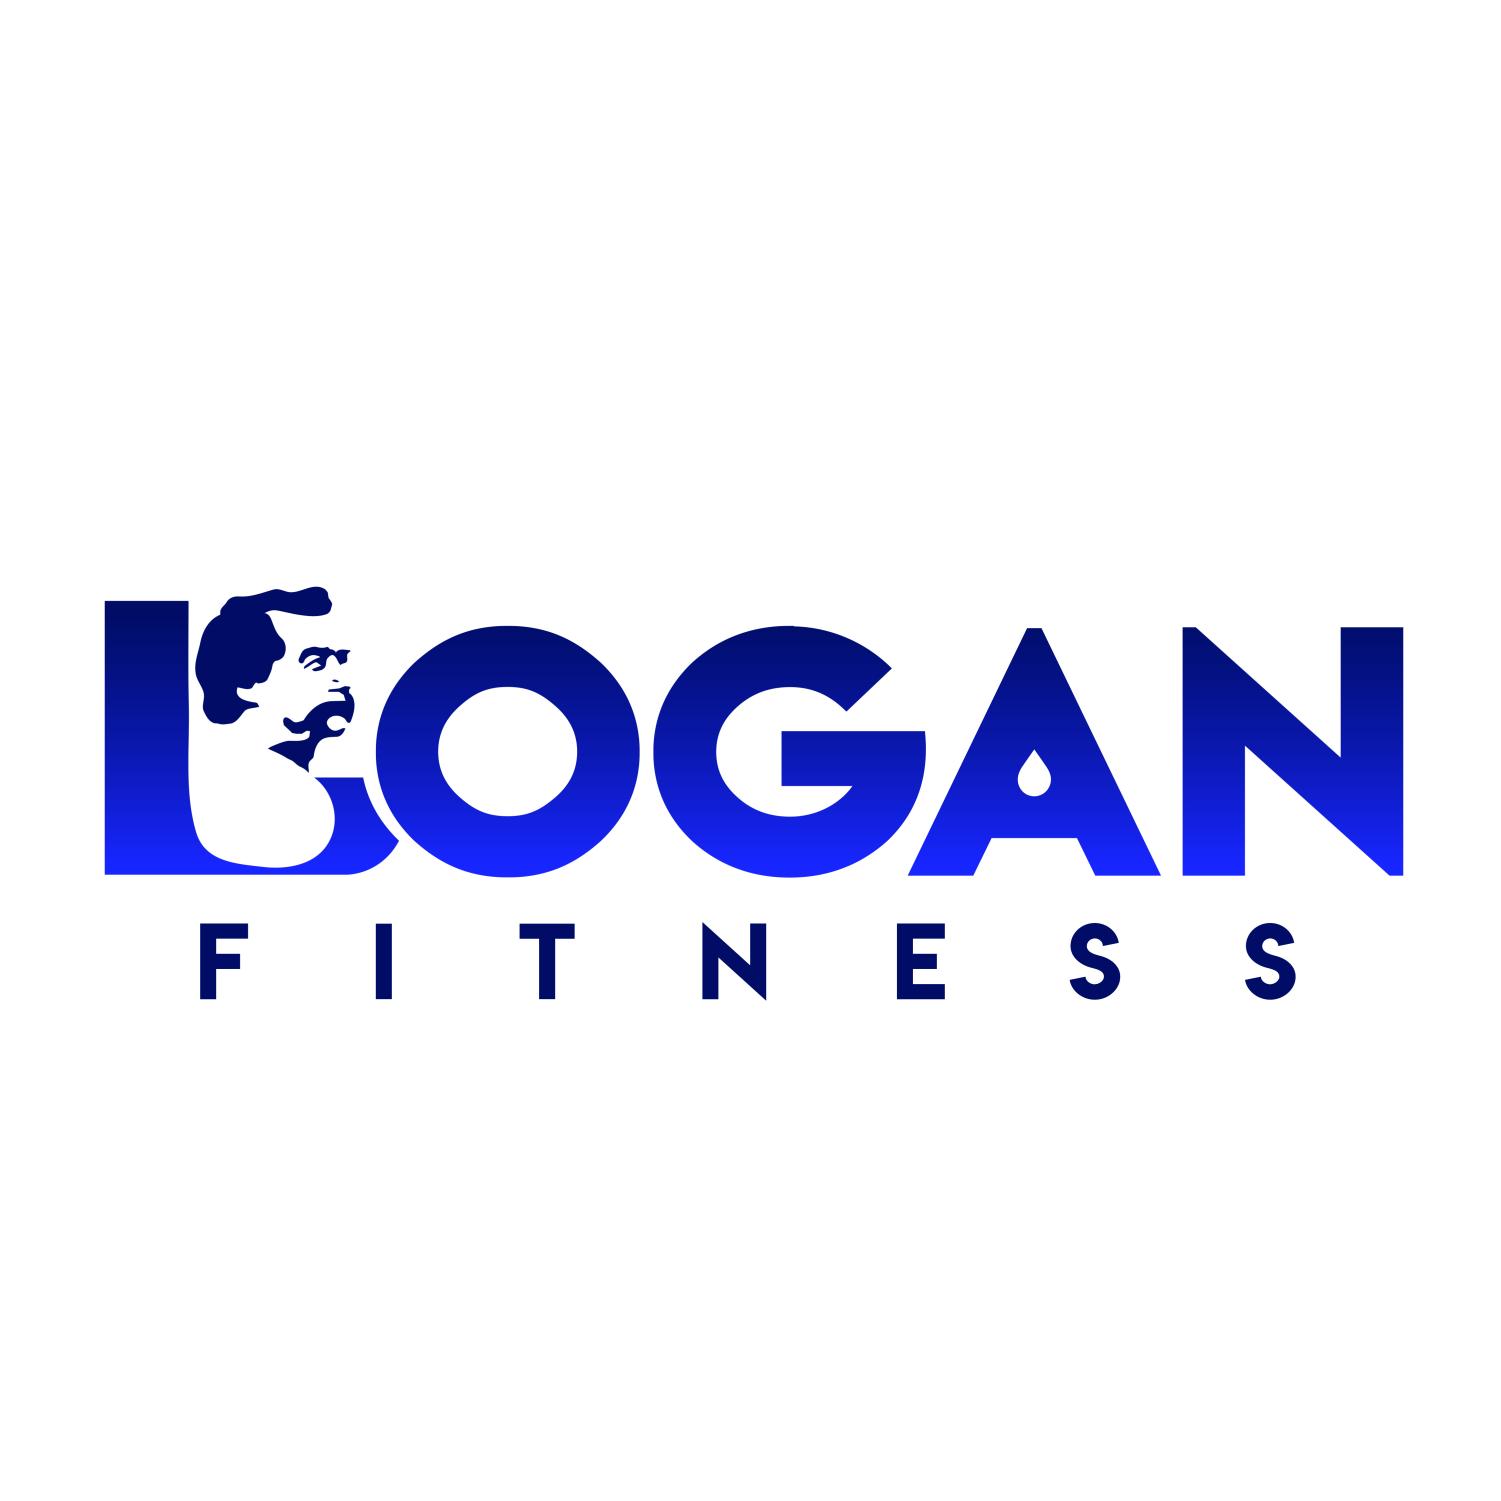 Logan Fitness